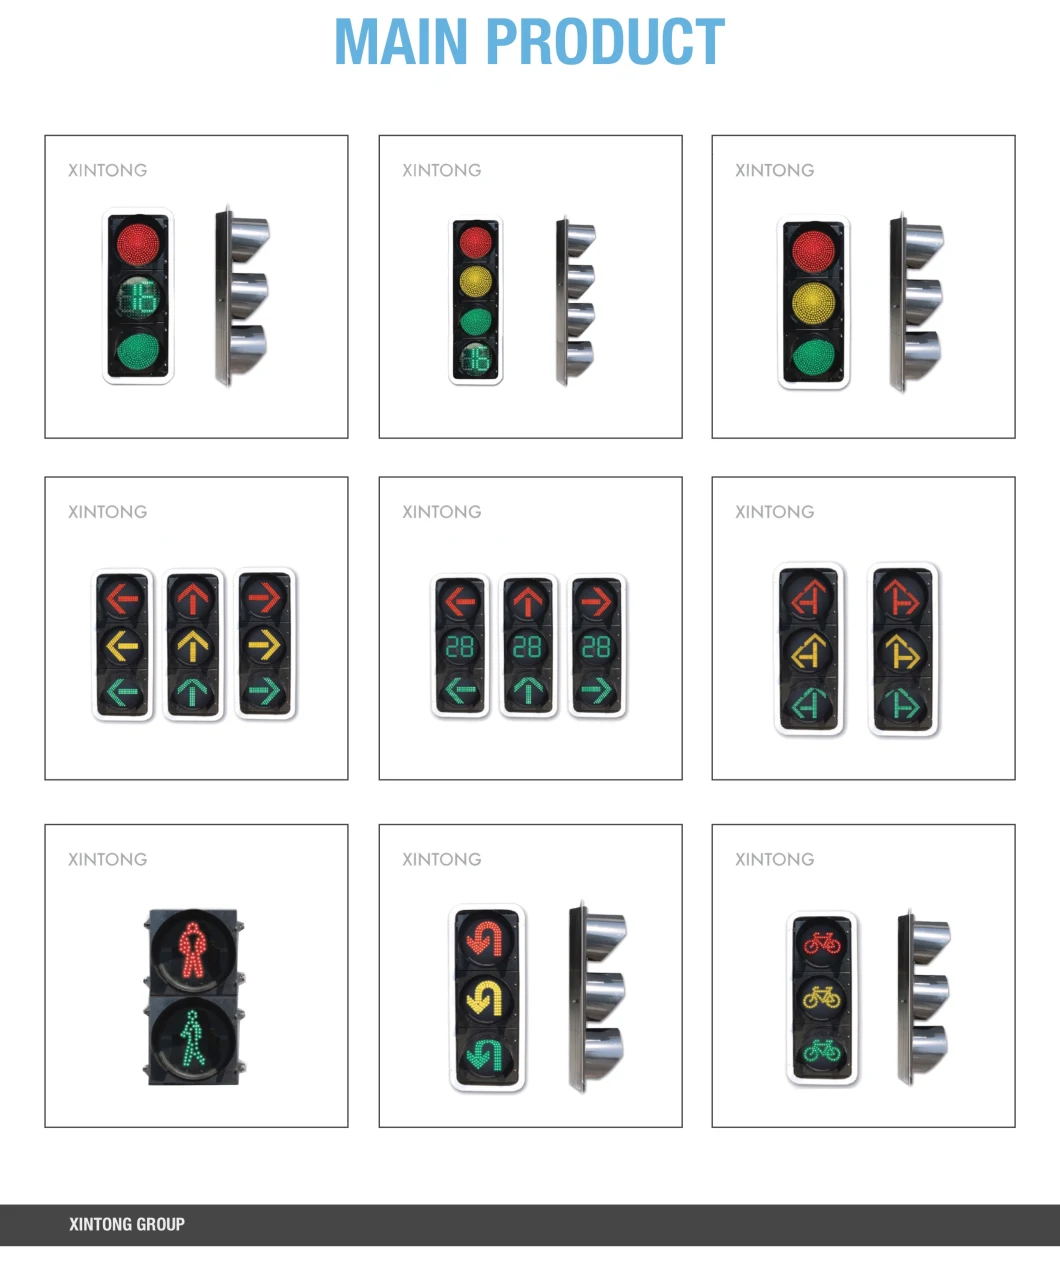 Solar Powered LED Traffic Signal Road Light Wireless Control System